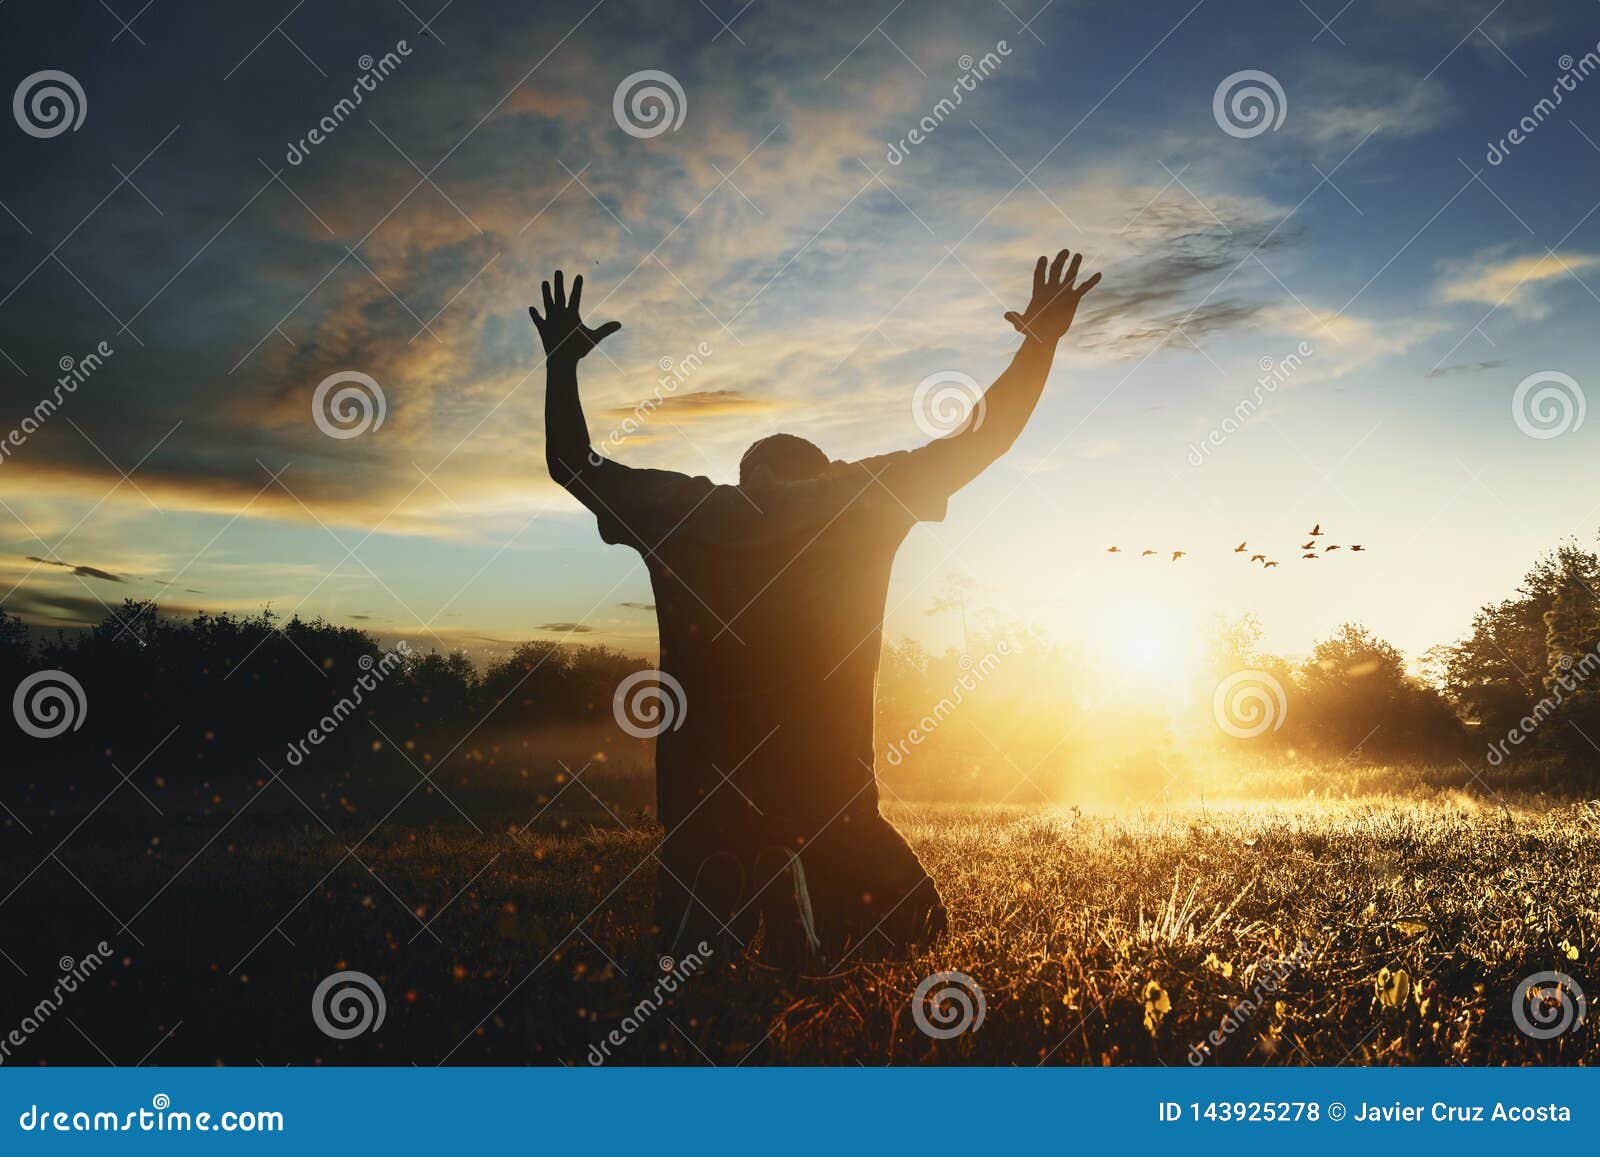 man raising his hands in worship